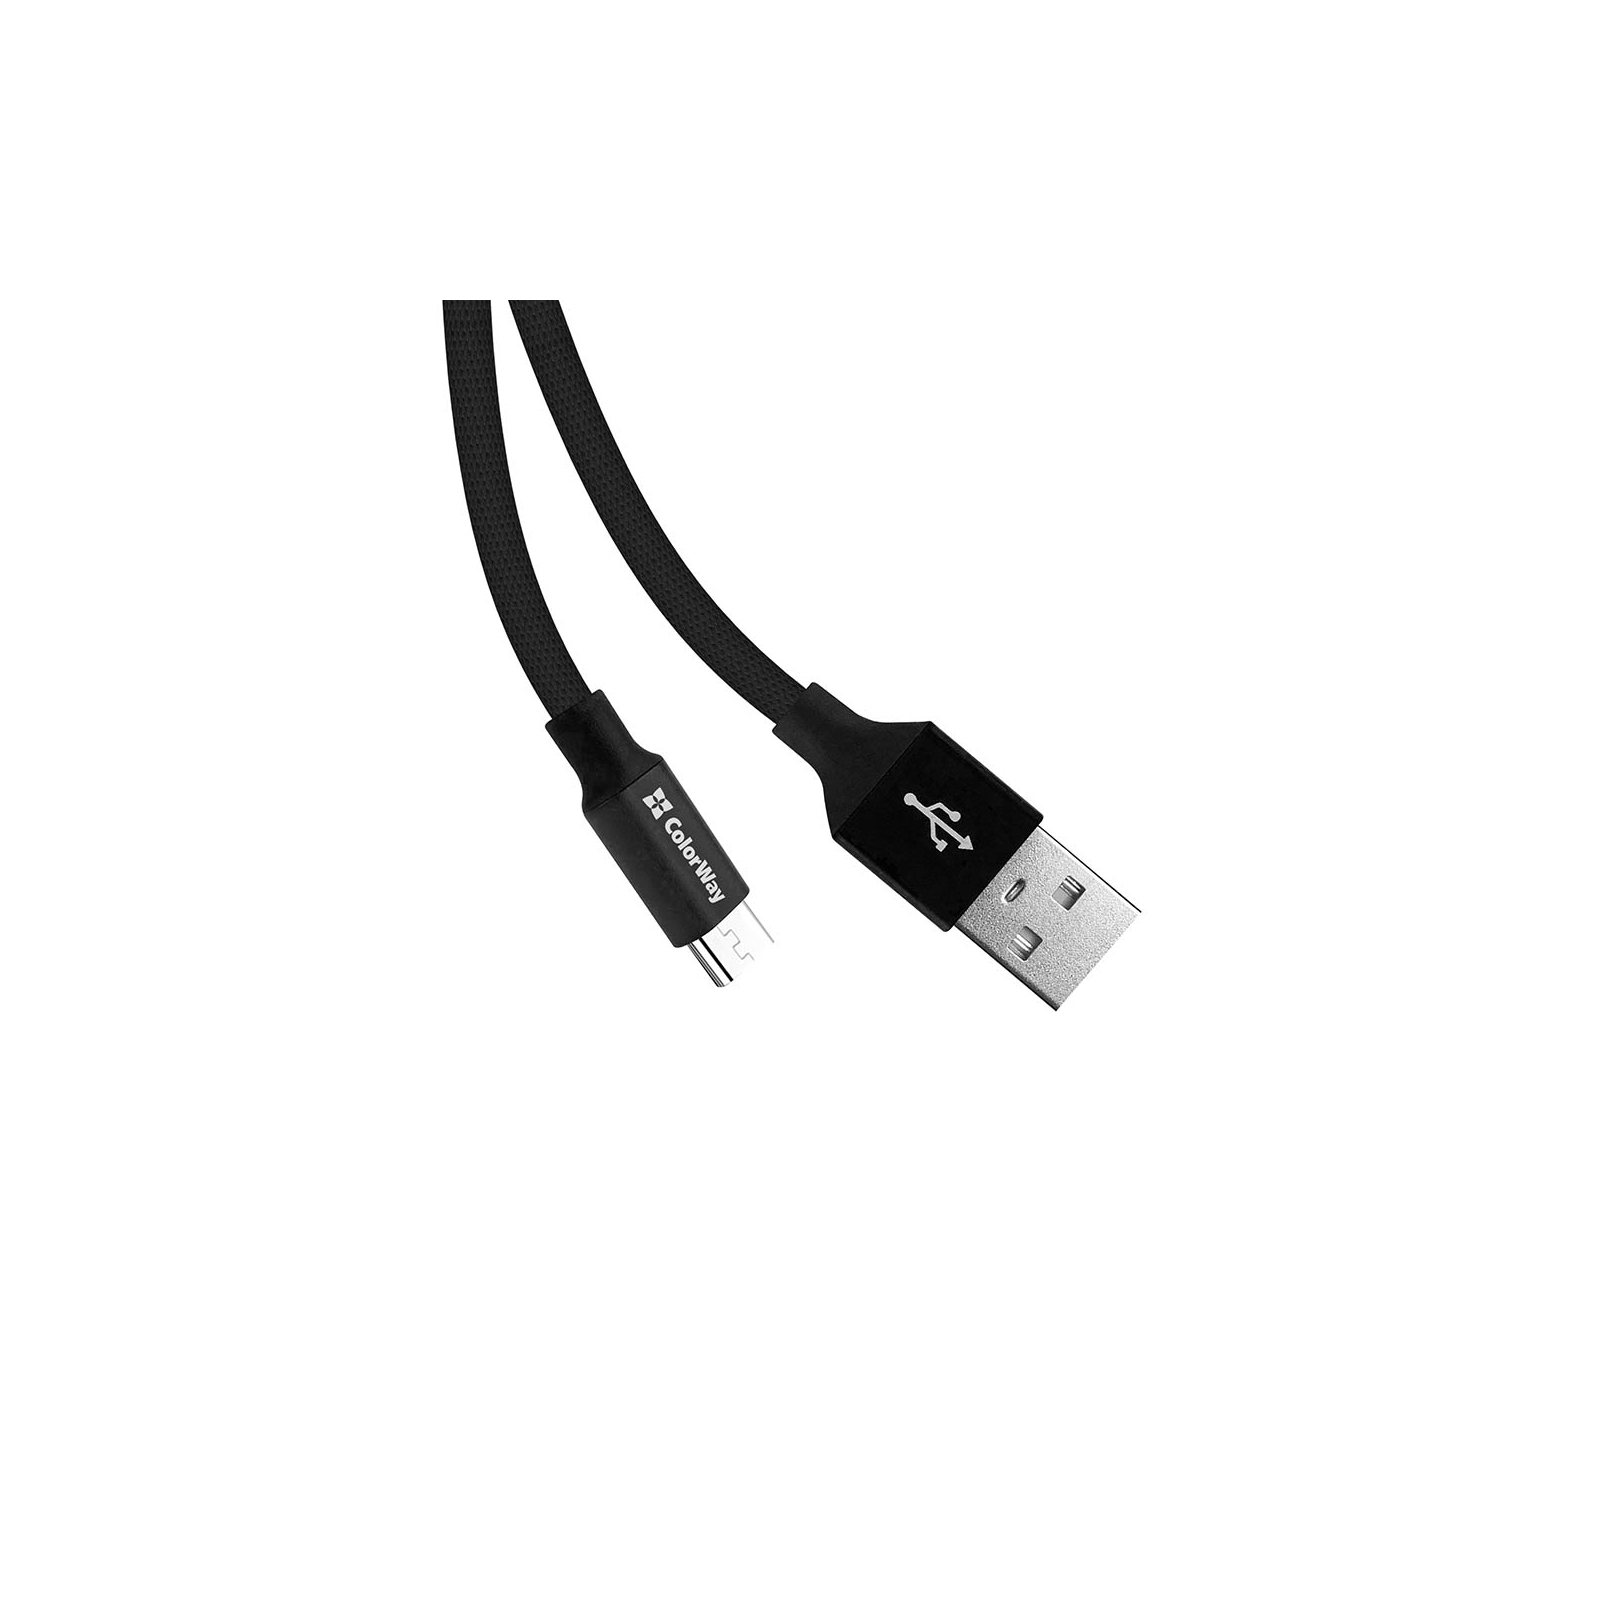 Дата кабель USB 2.0 AM to Micro 5P 0.25m black ColorWay (CW-CBUM048-BK) зображення 3